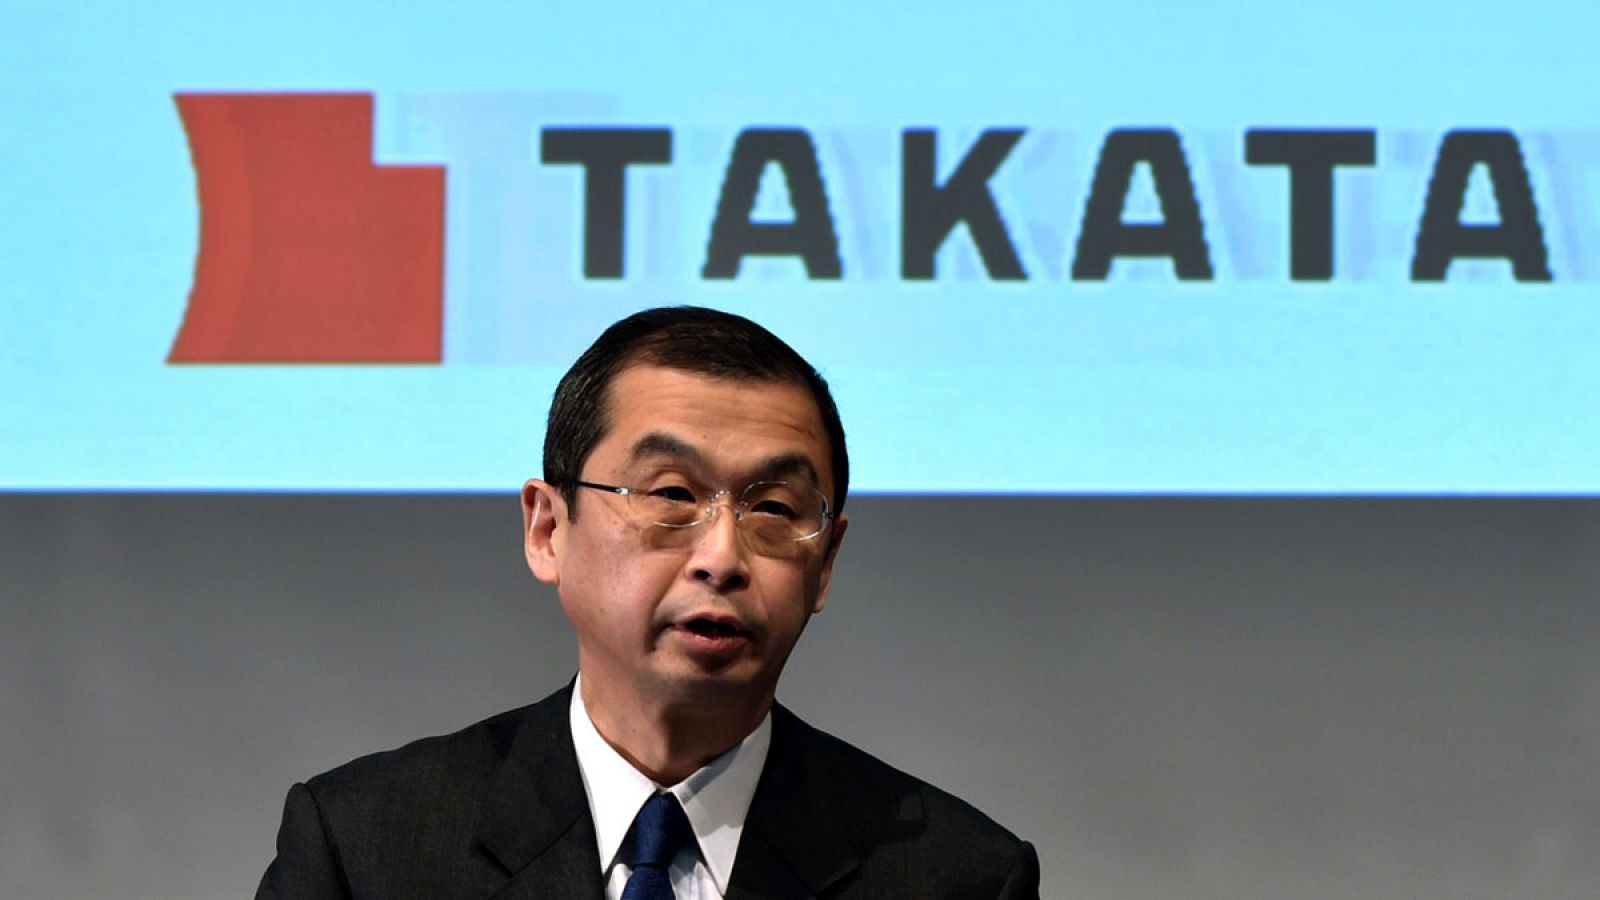 El presidente de Takata, Shigehisa Takada